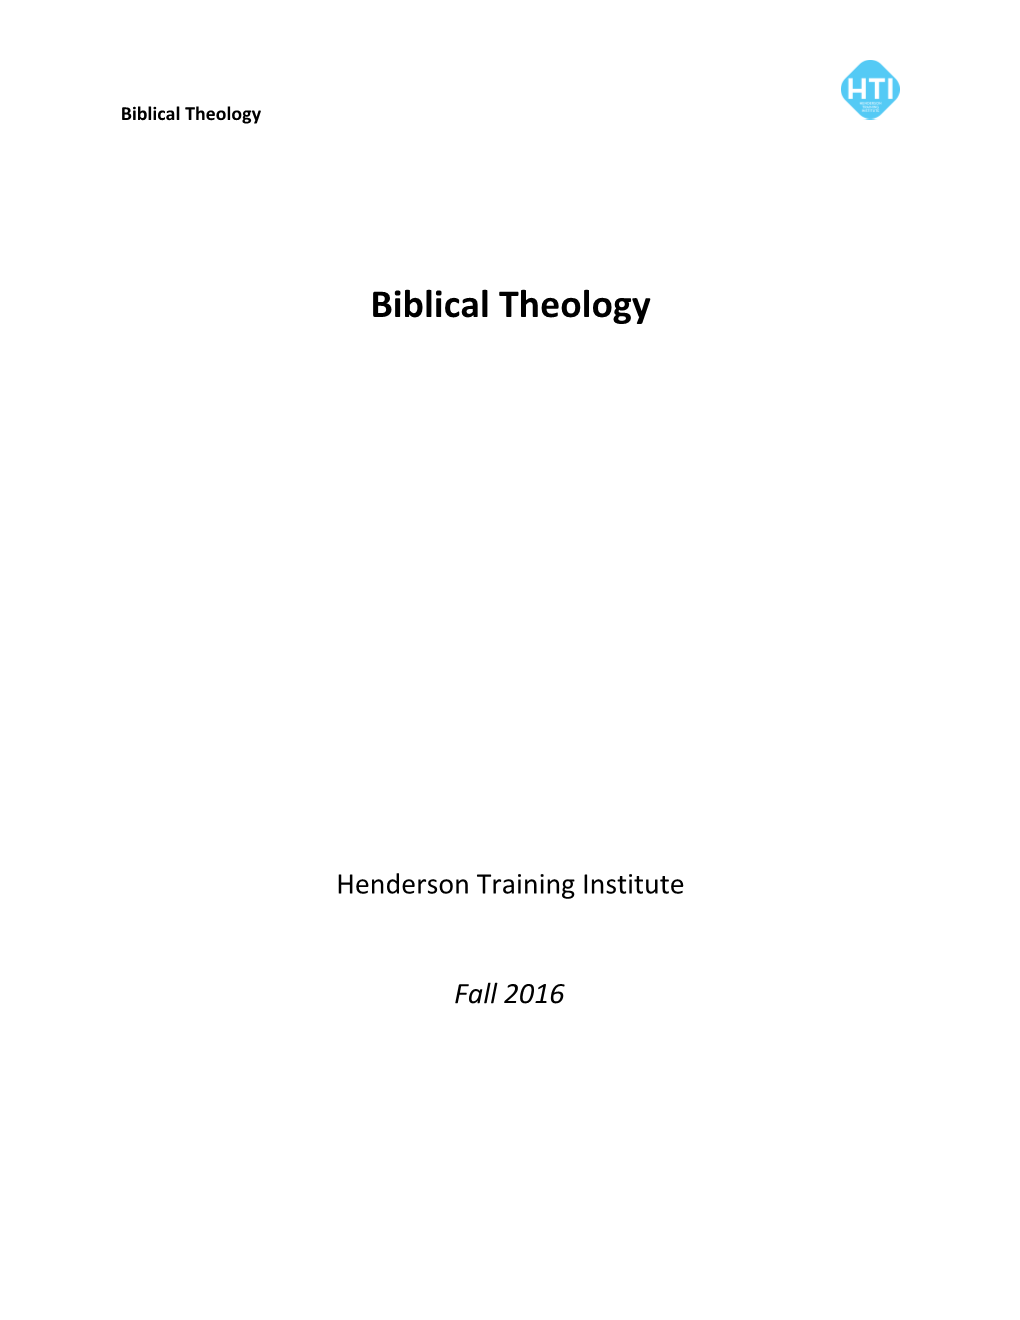 Biblical Theology: Course Syllabus